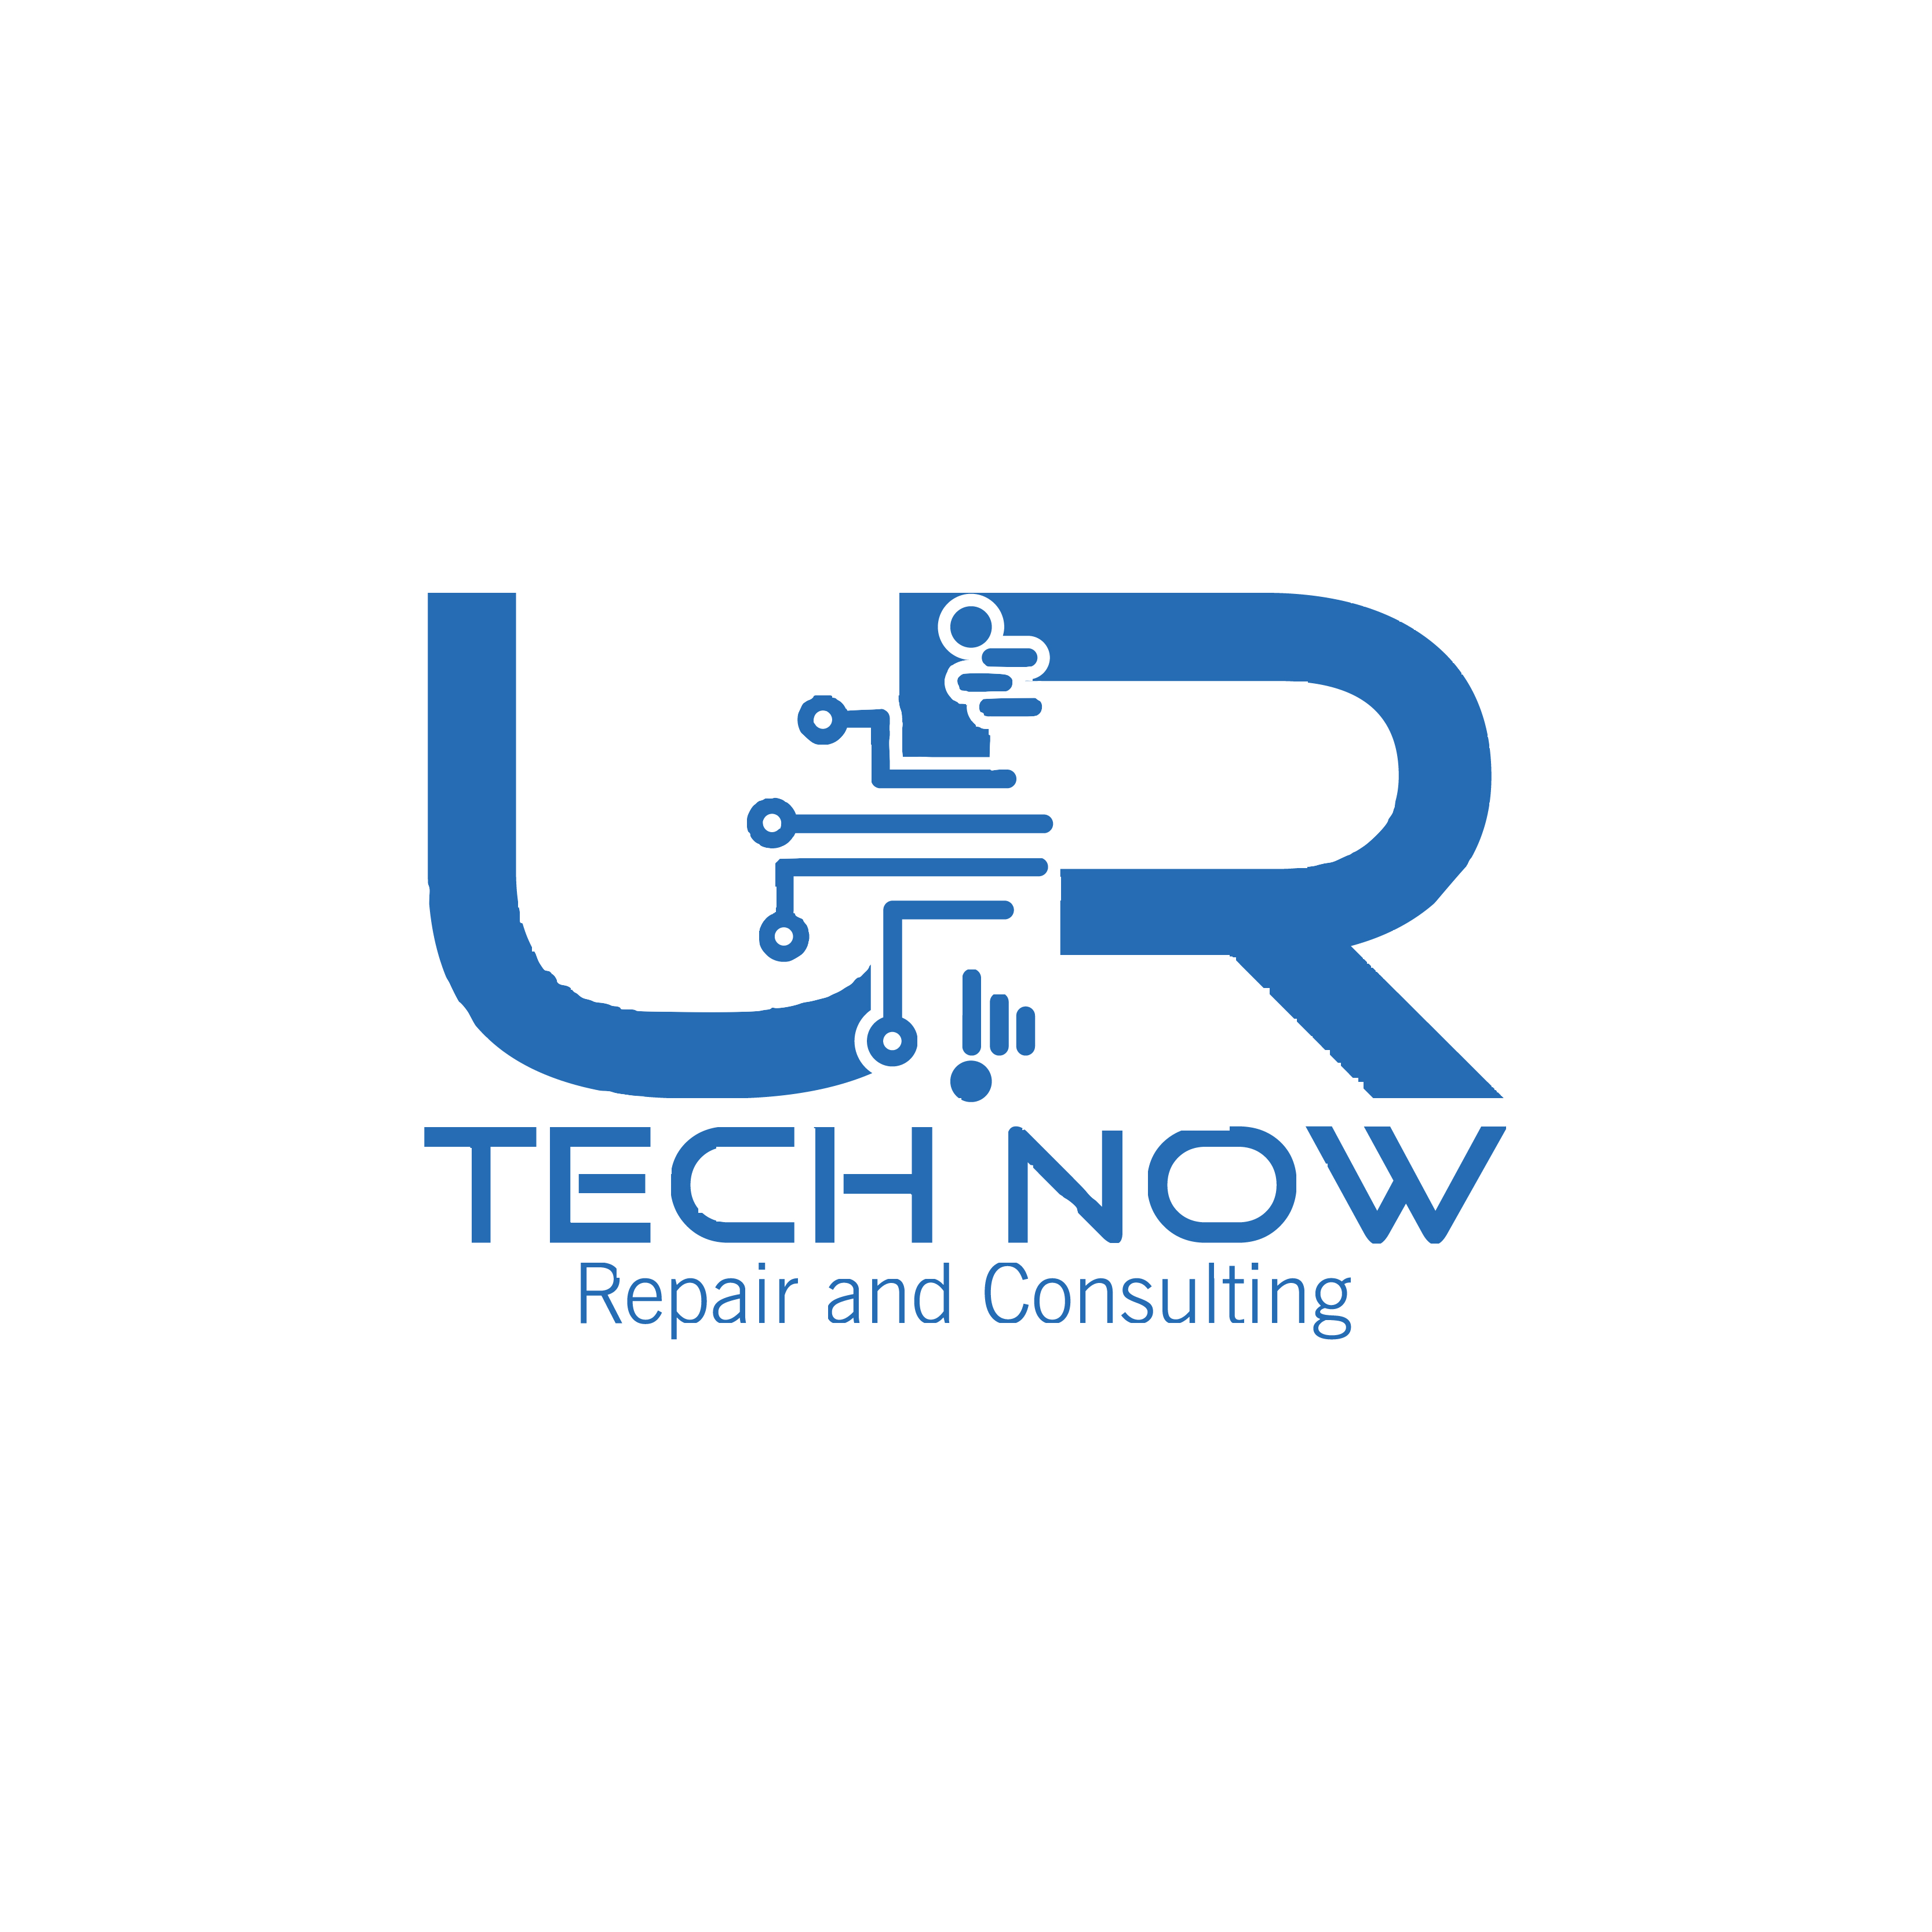 IT Managed Services / Computer Services | UrTechNow